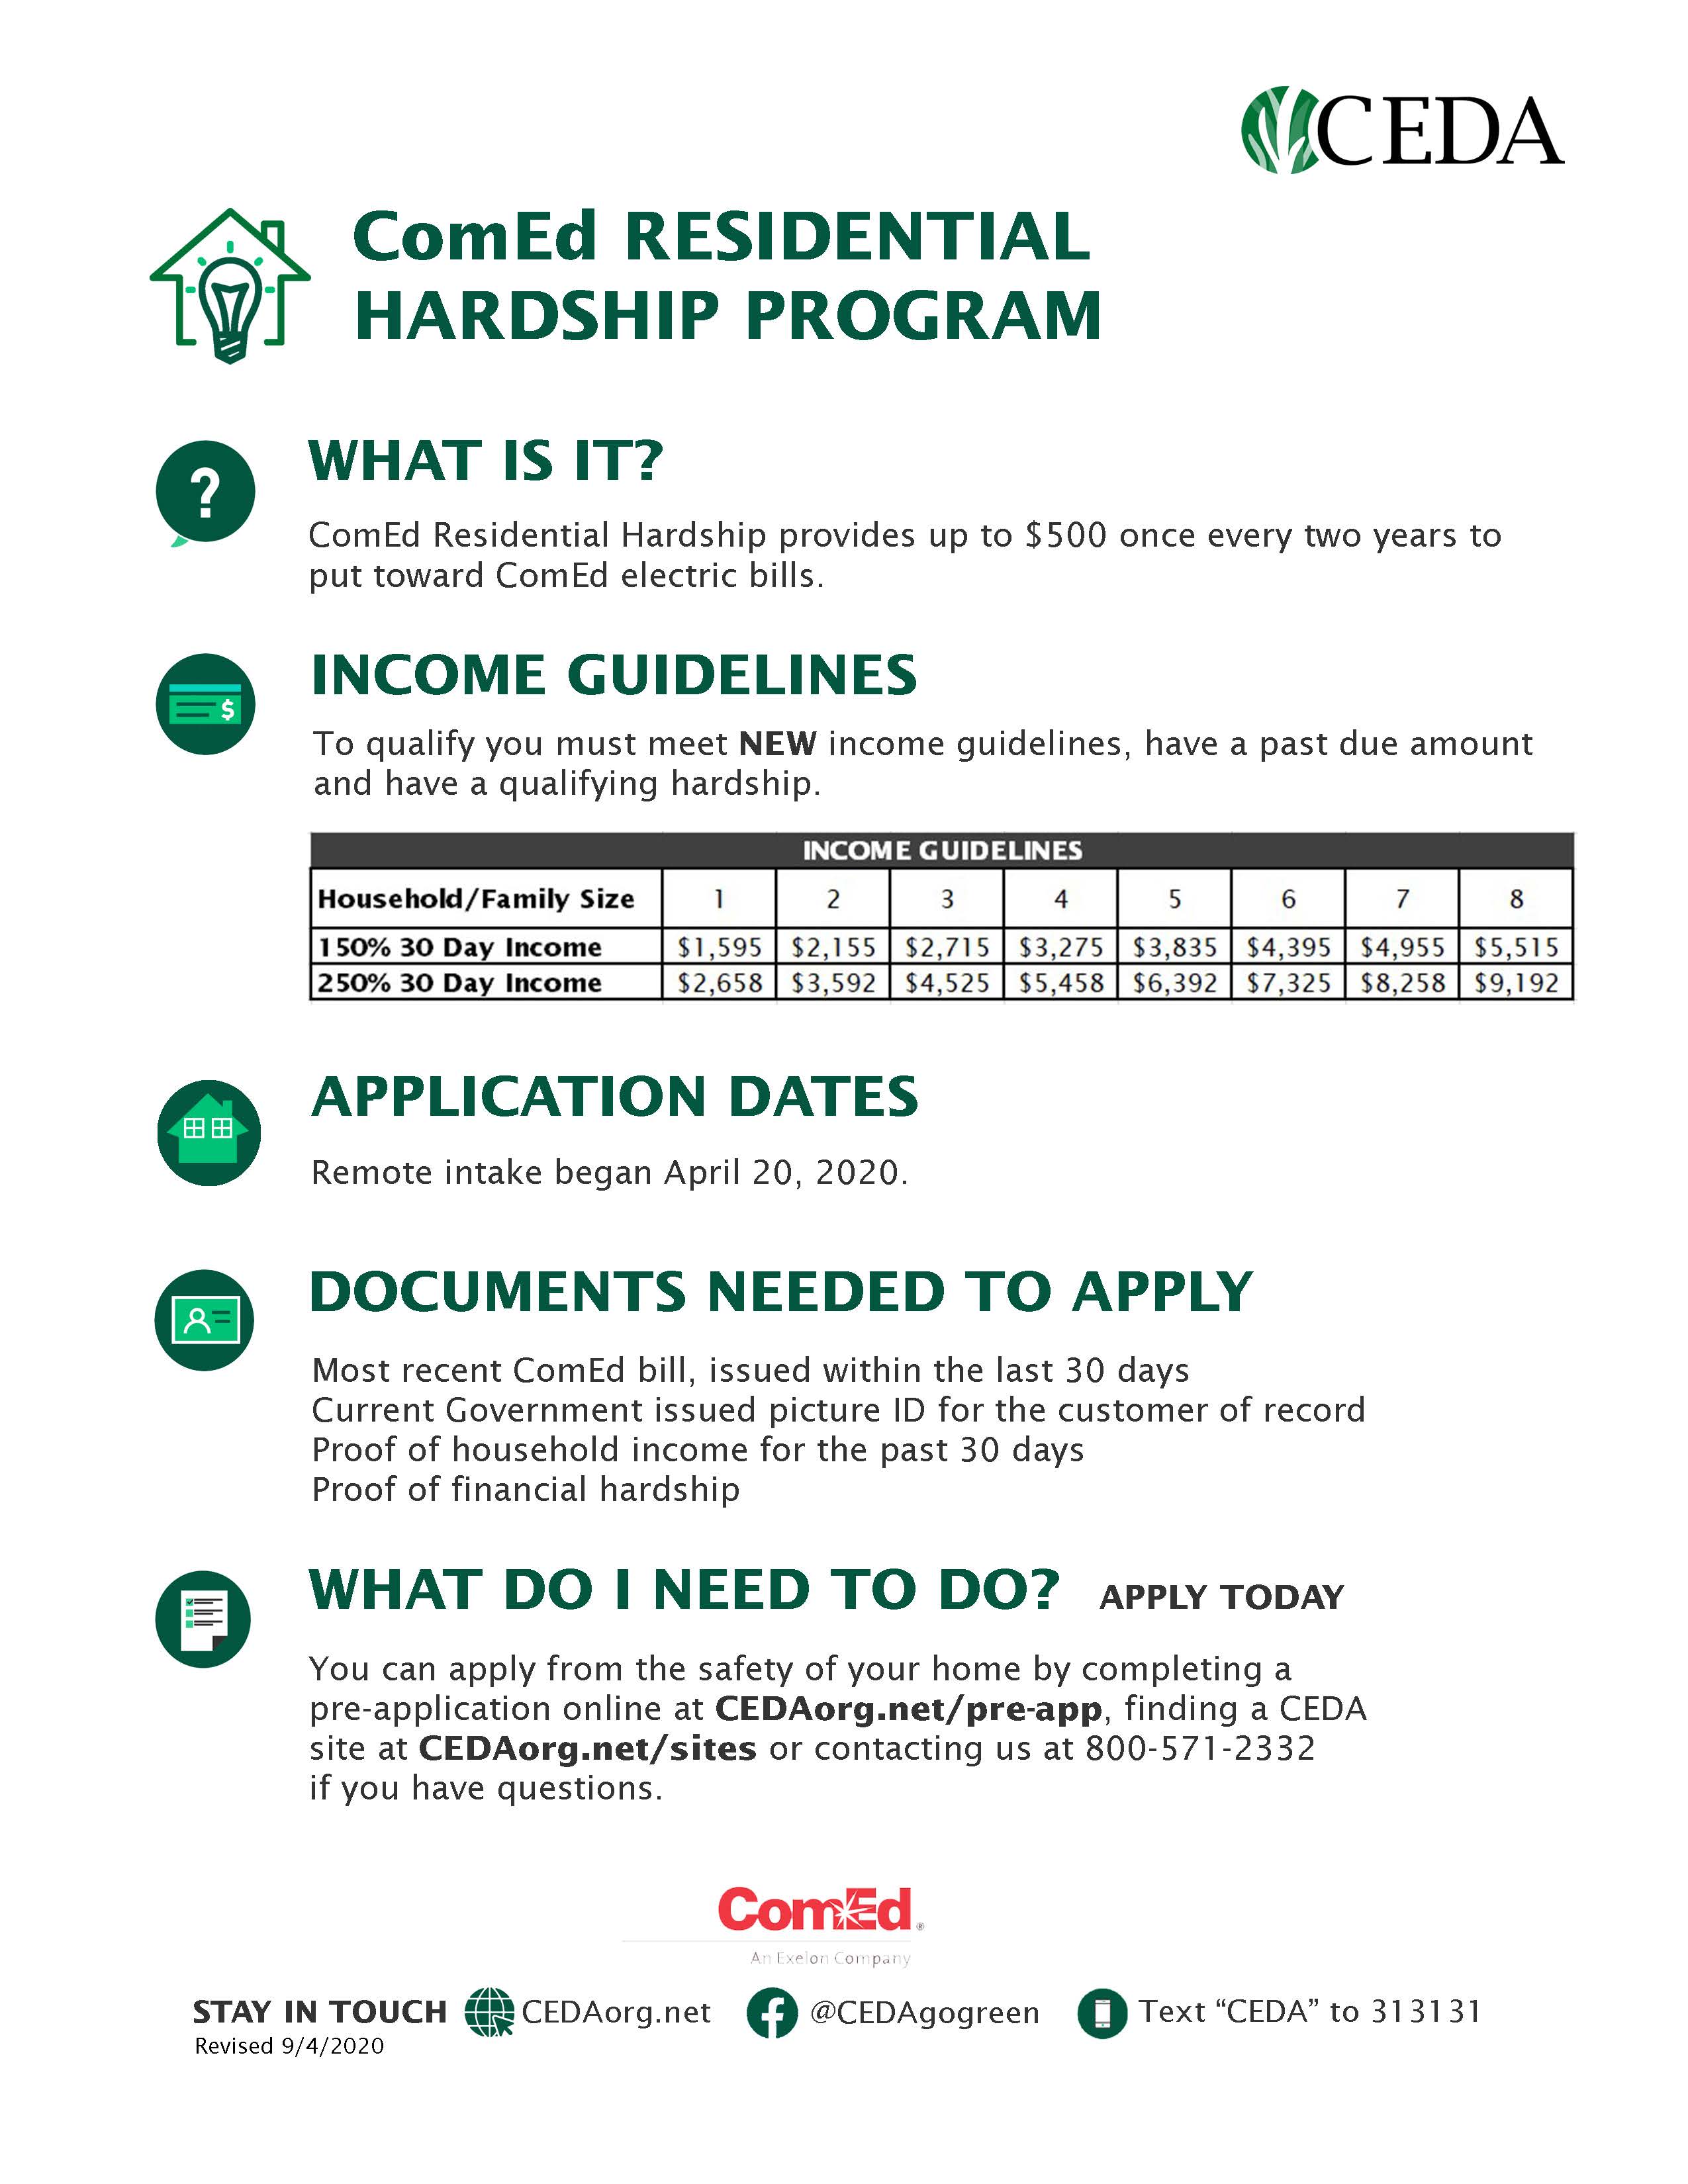 ComEd Residential Hardship Program Information 10.5.2020